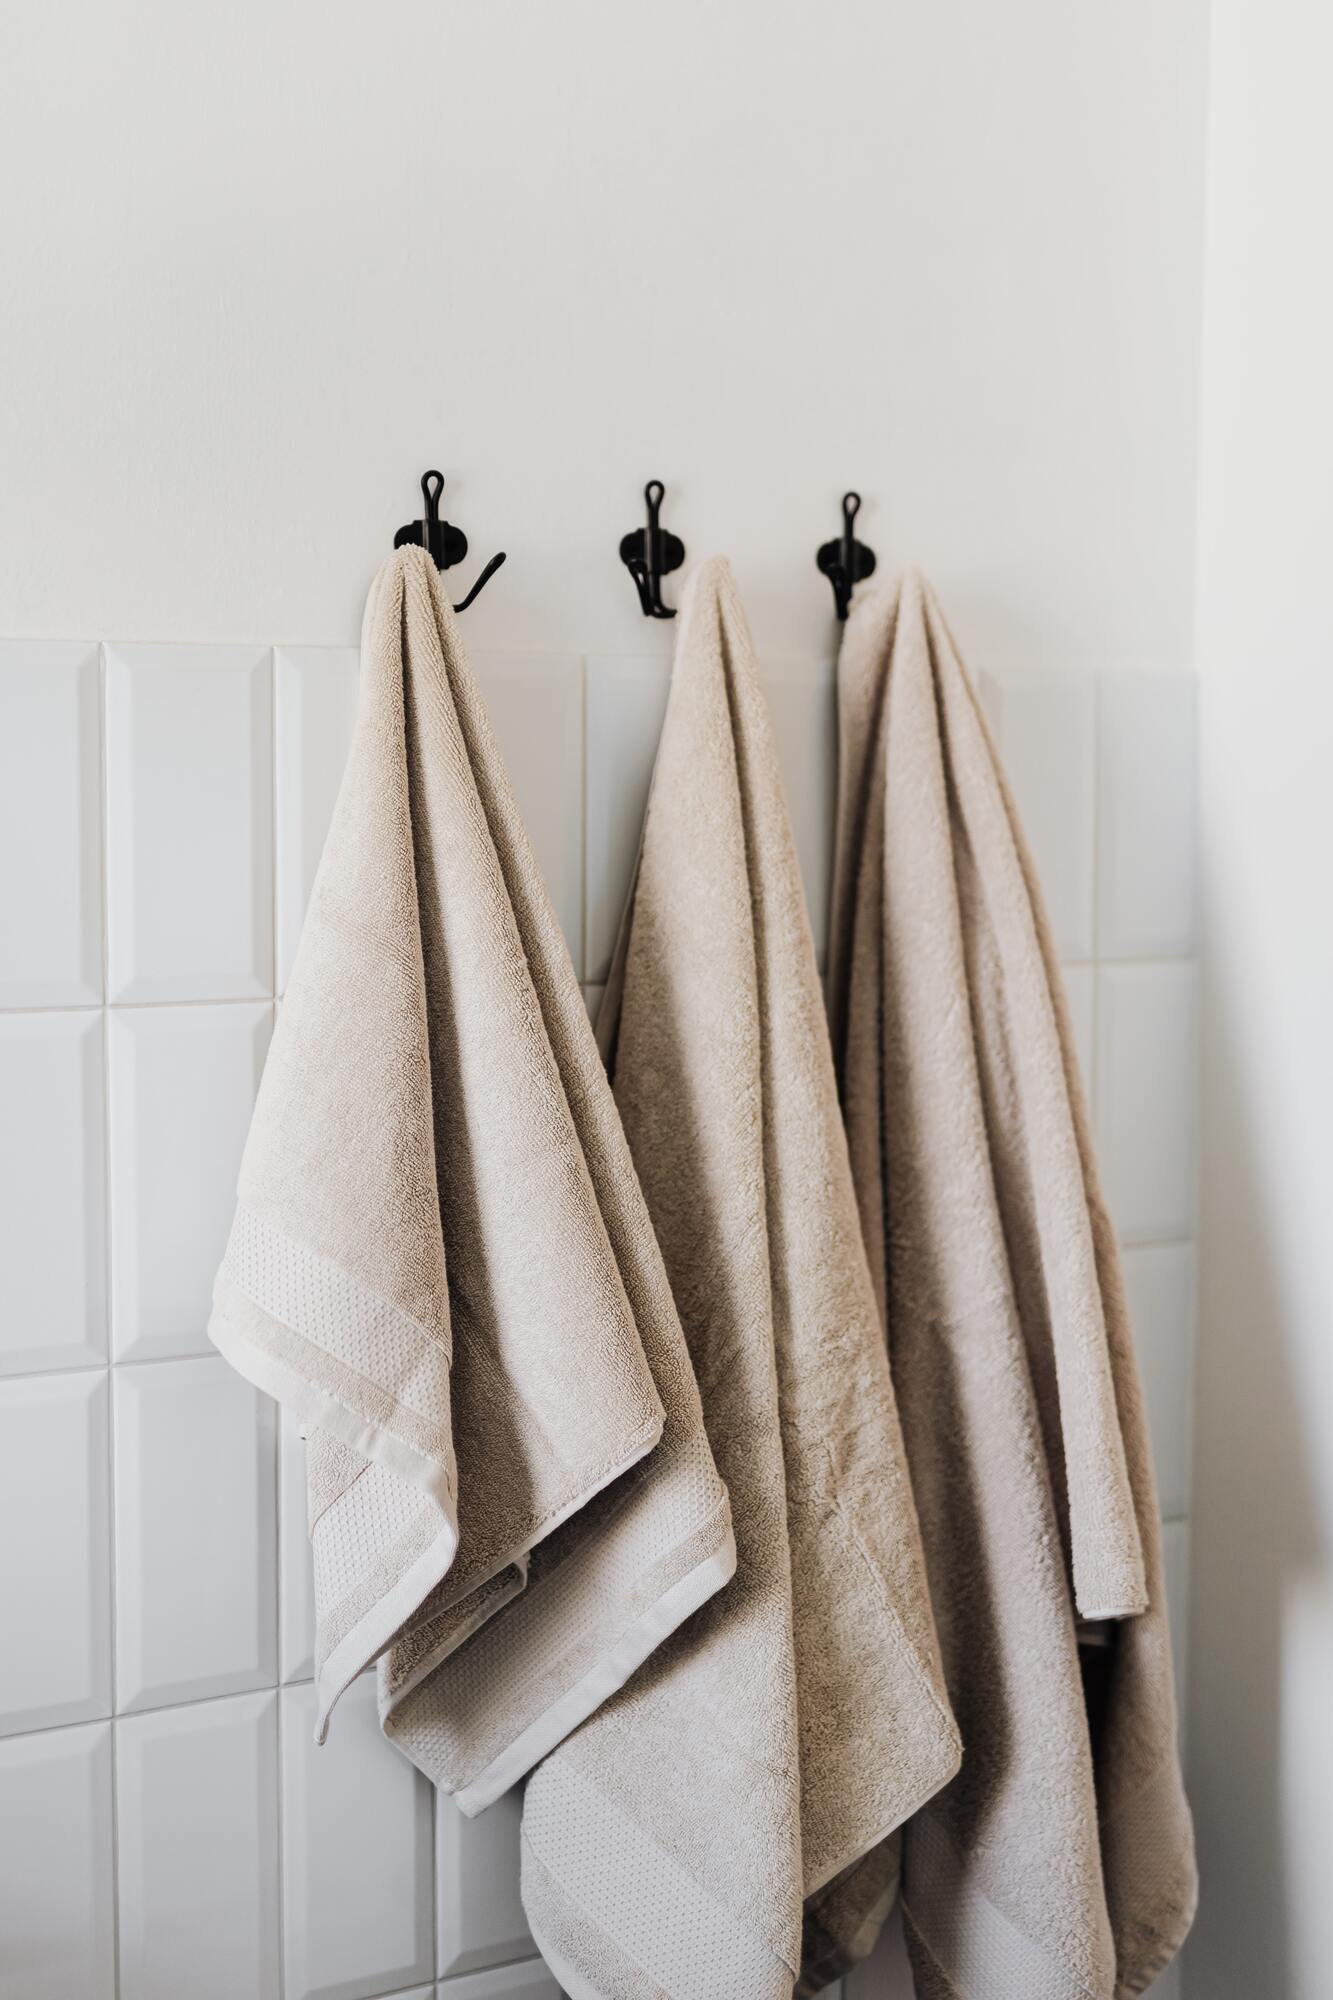 Как правильно стирать полотенца от пятен